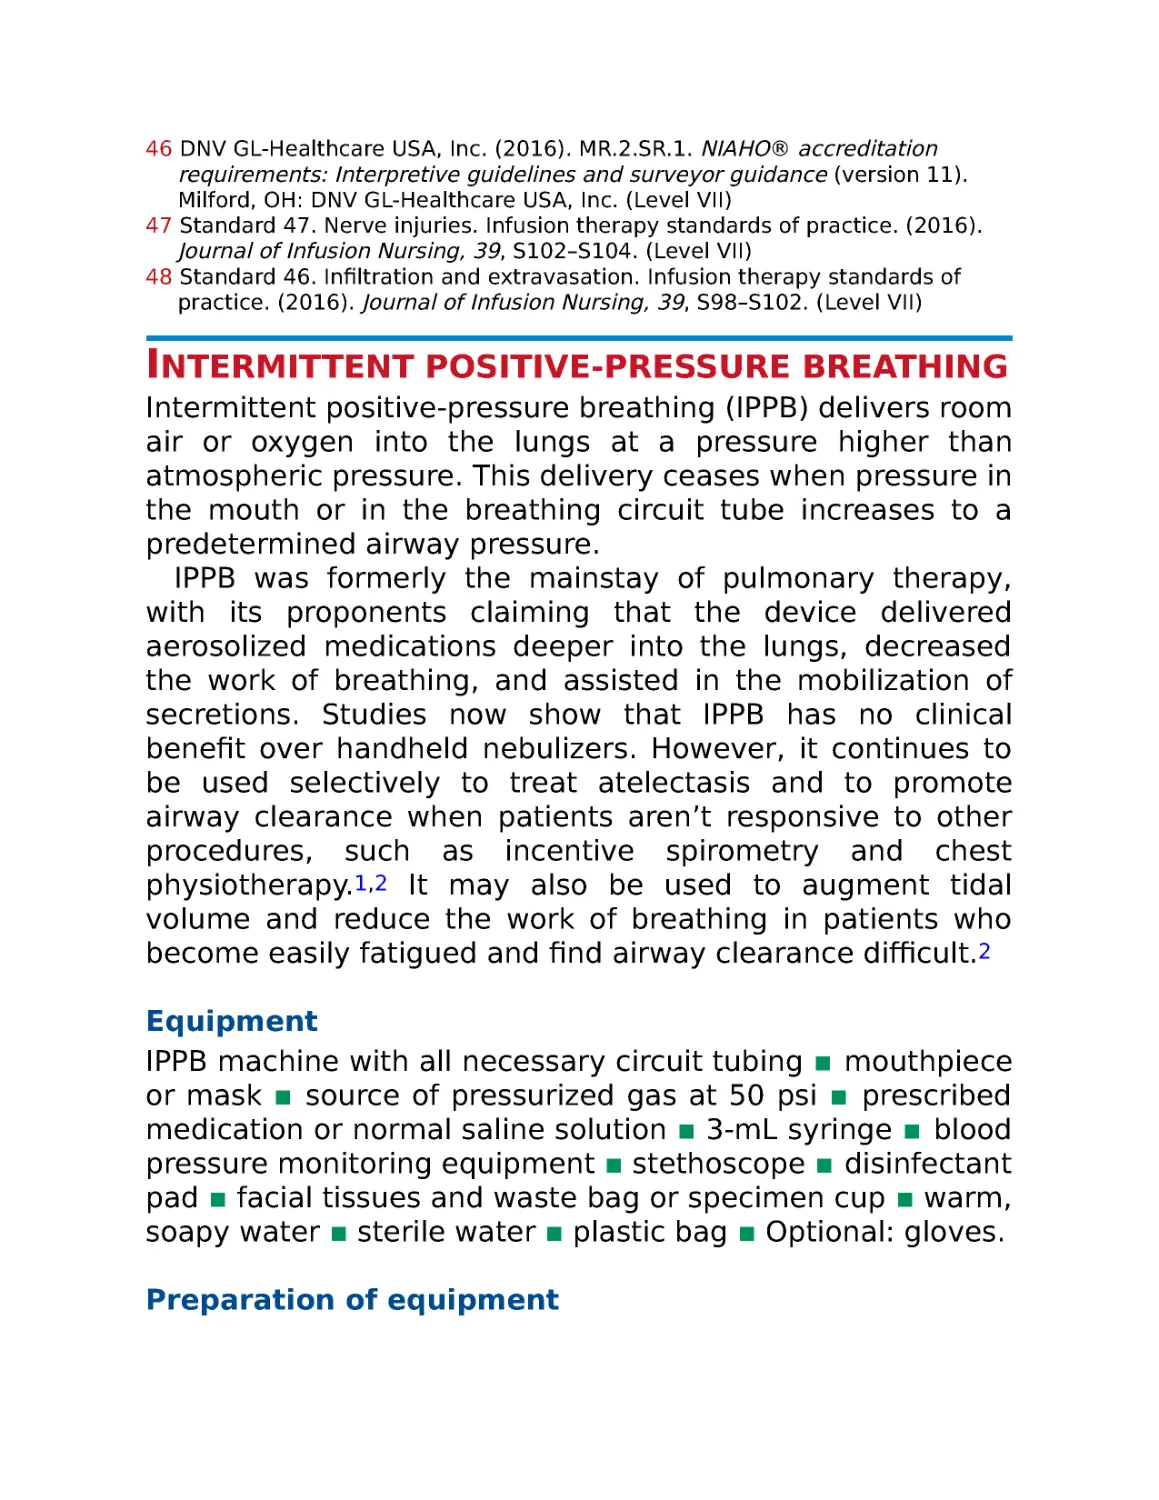 Intermittent positive-pressure breathing